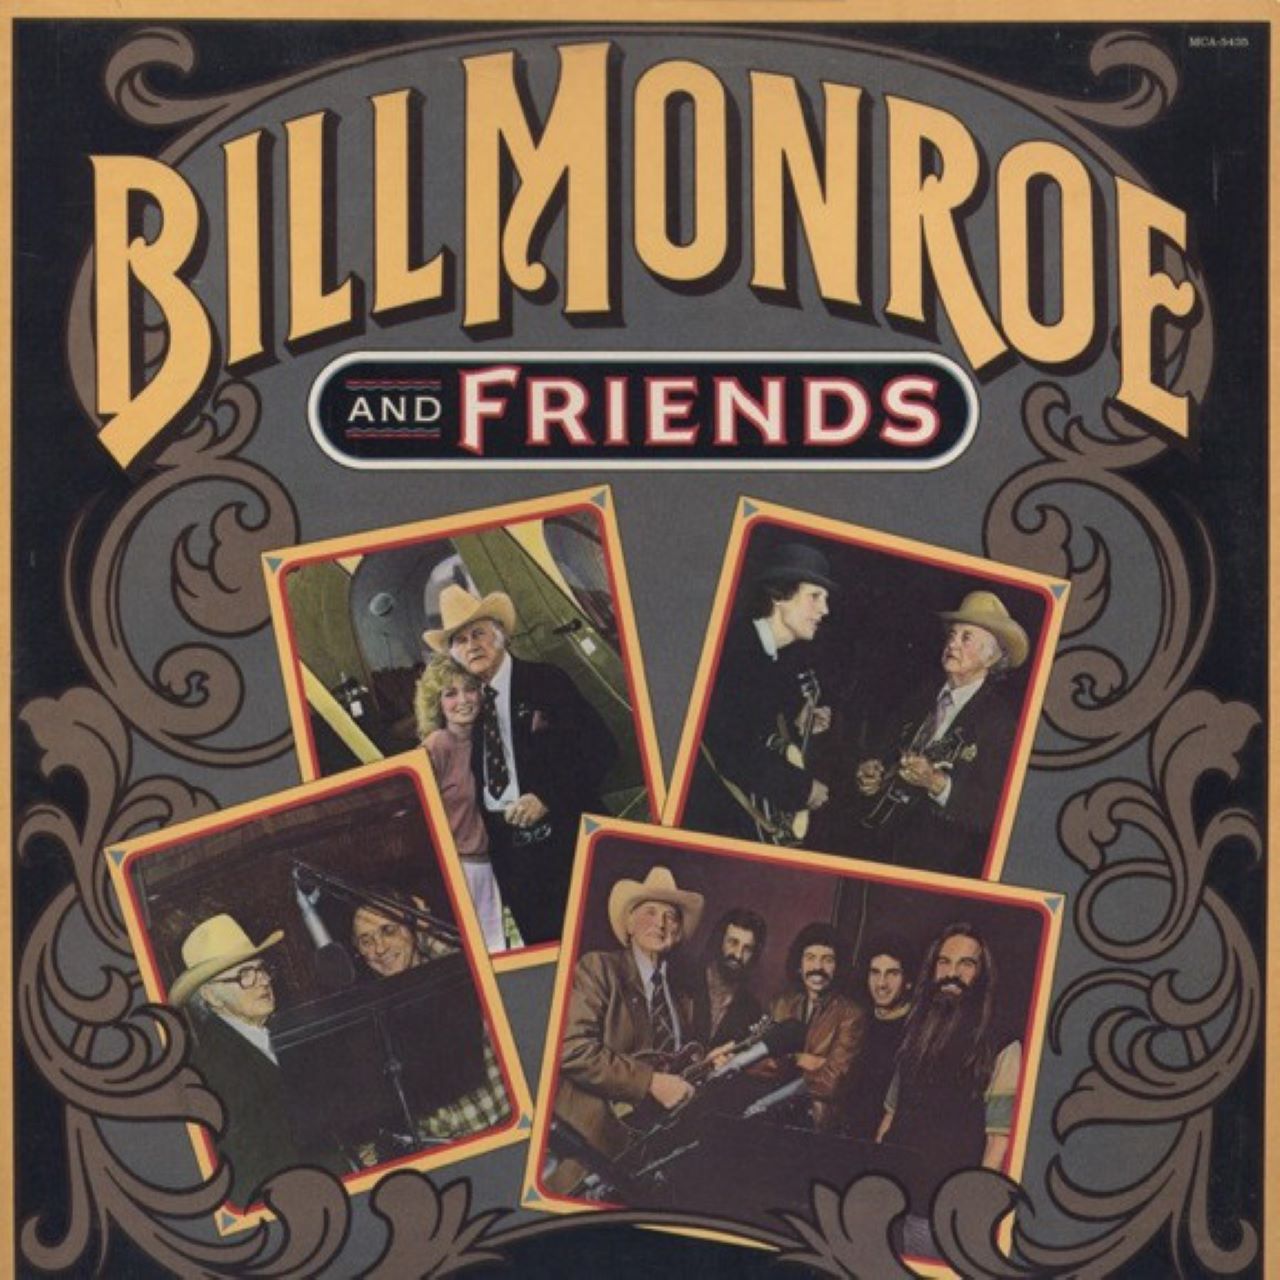 Bill Monroe - Bill Monroe & Friends cover album